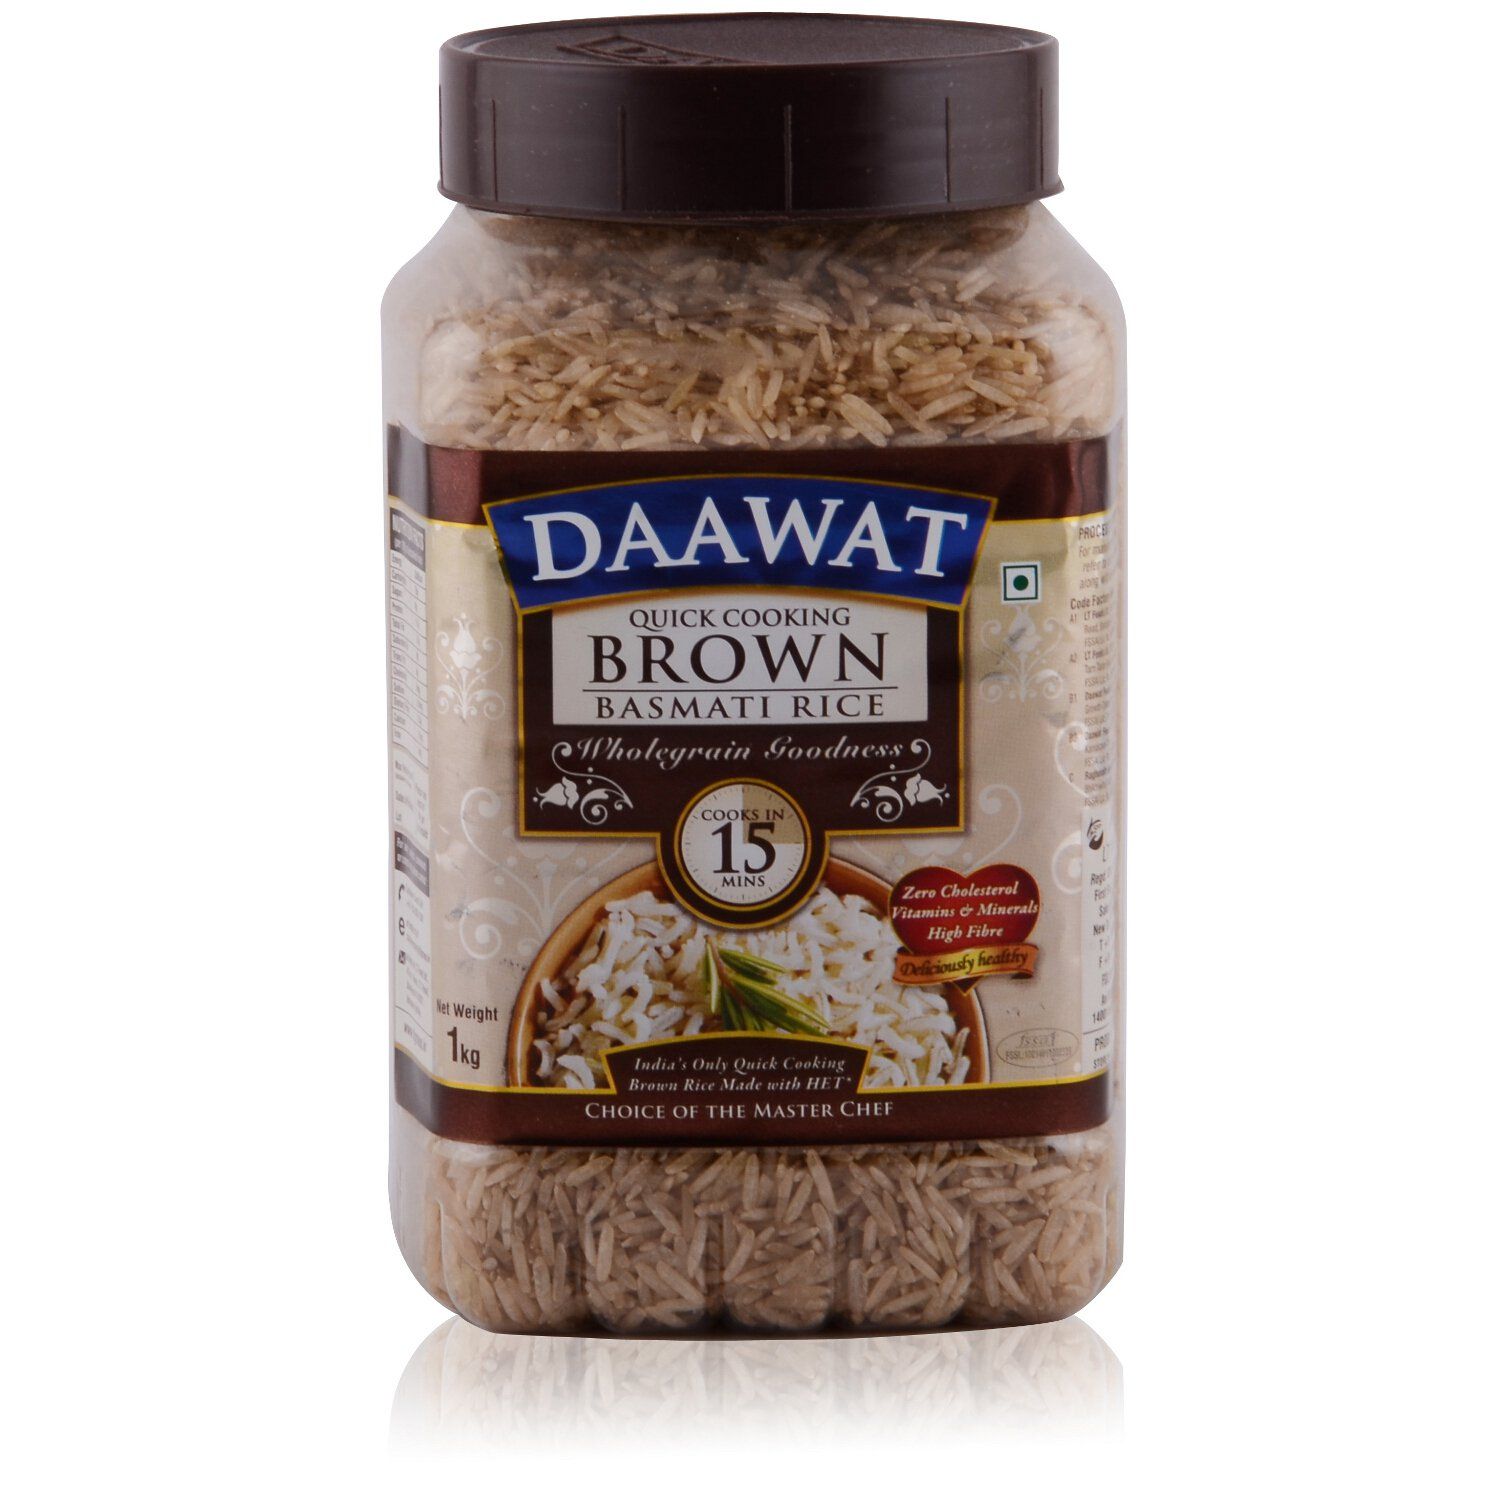 Daawat Basmati Rice Image